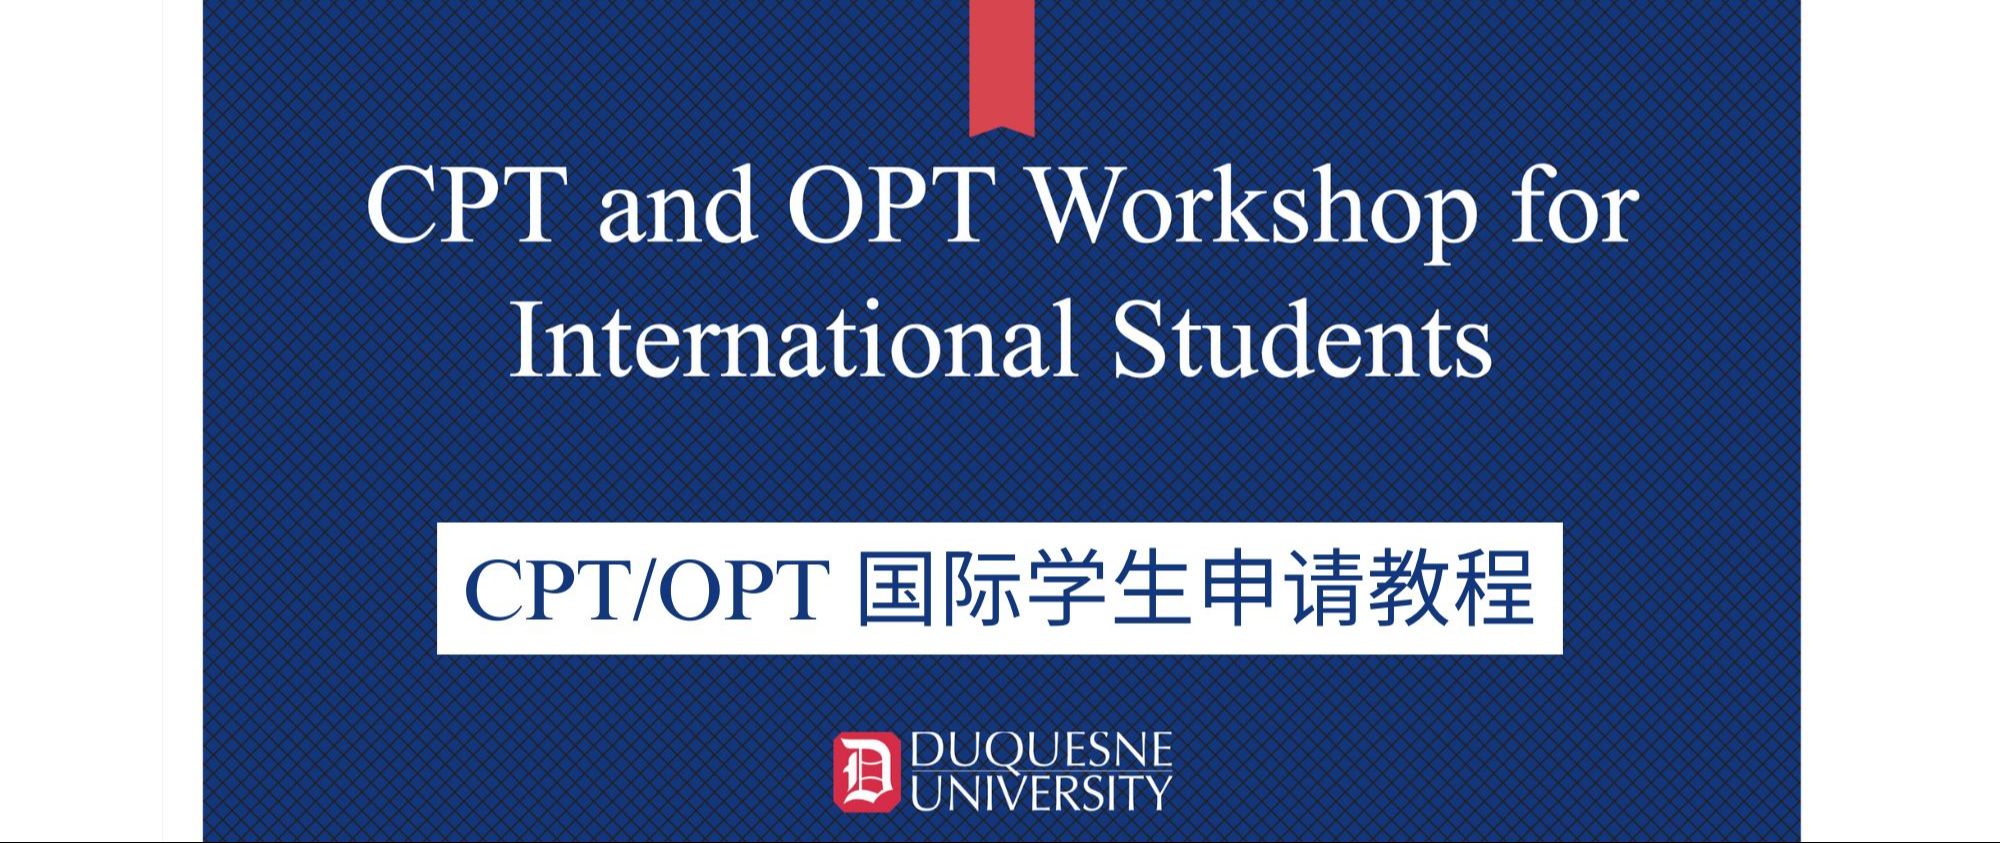 CPT/OPT 留学生申请干货